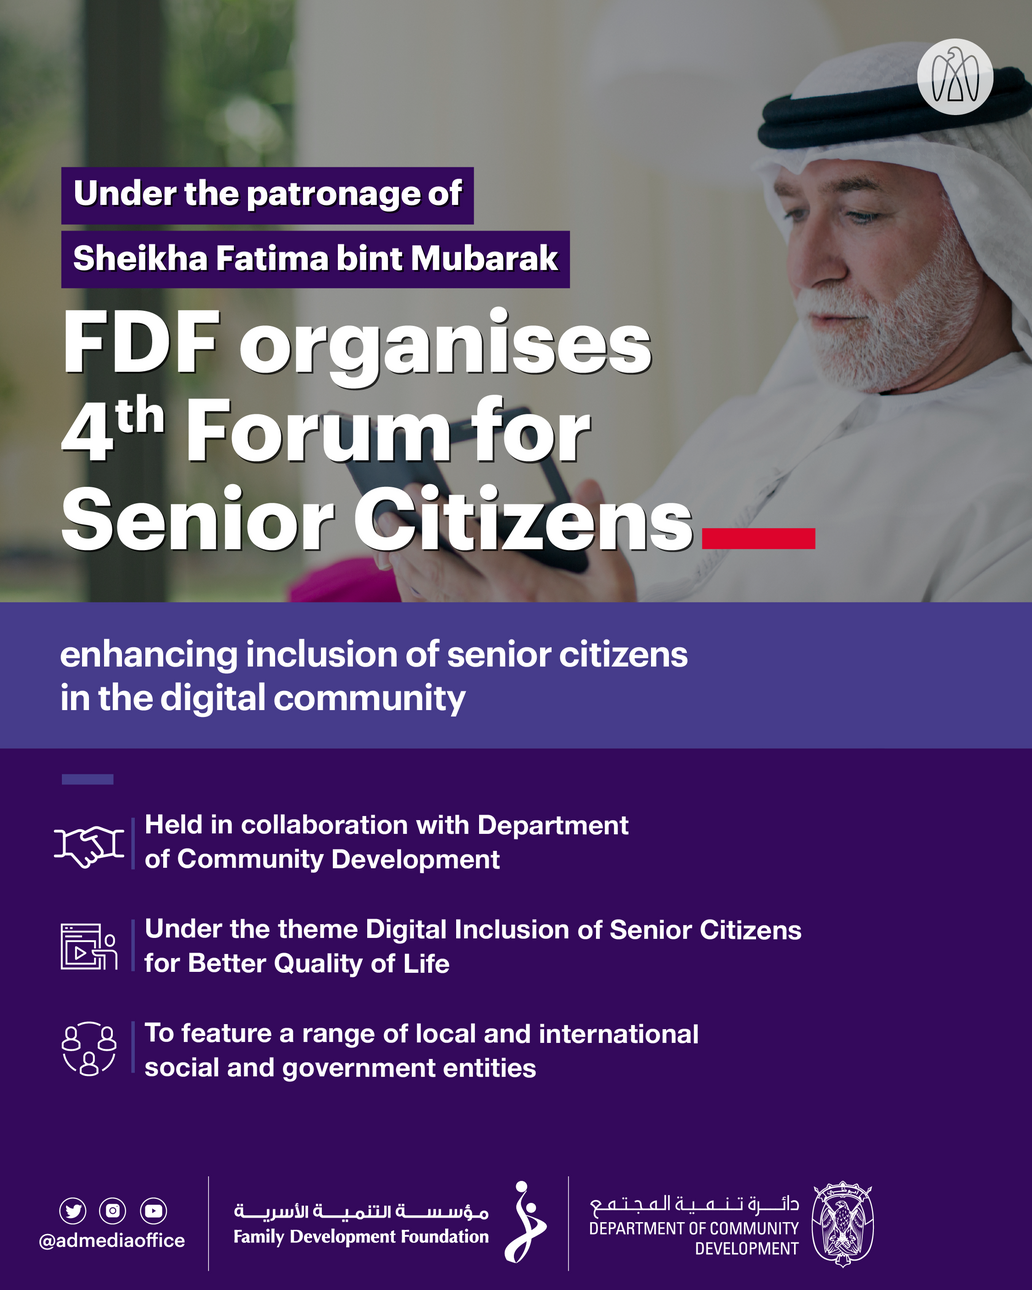 FDF organises the 4th Forum for Senior Citizens